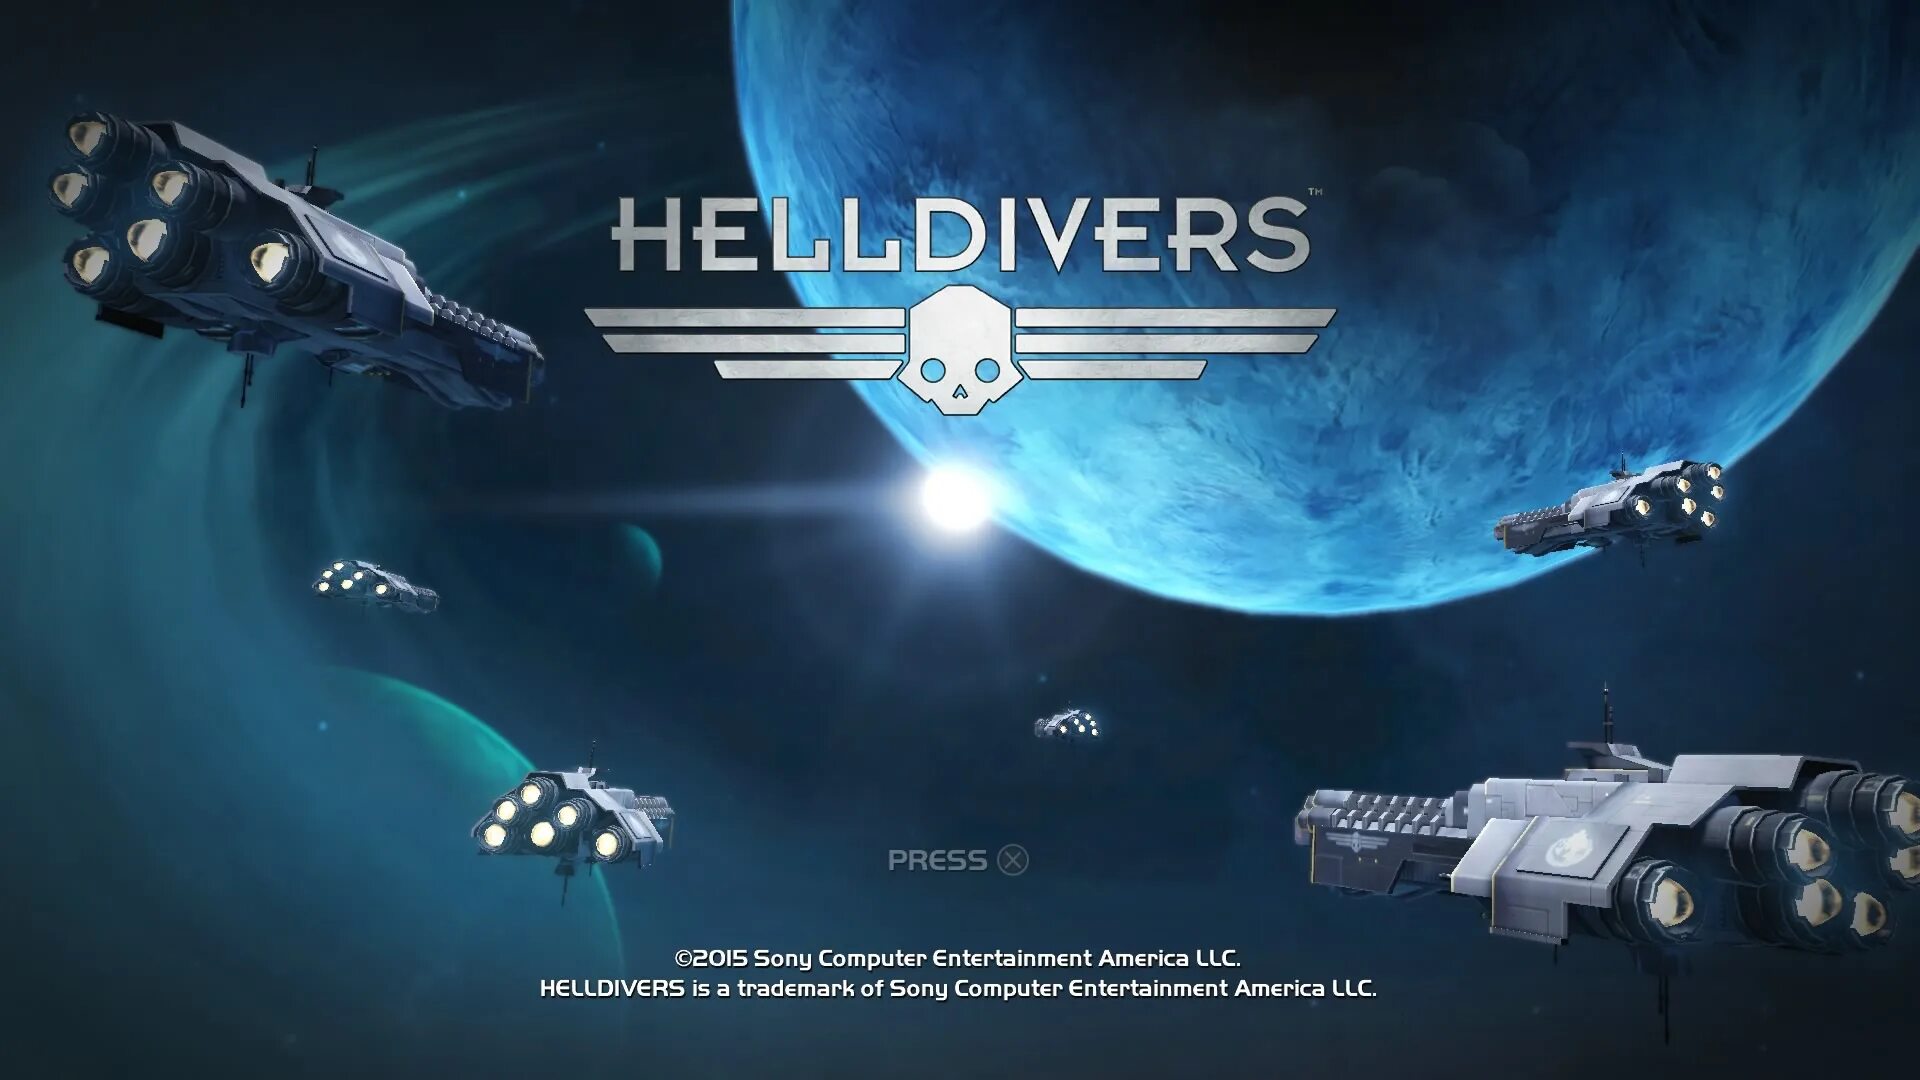 Helldivers 2 на пс5. Helldivers пс3. Helldivers ps3. Helldivers обои. Хеллдайвер игра.